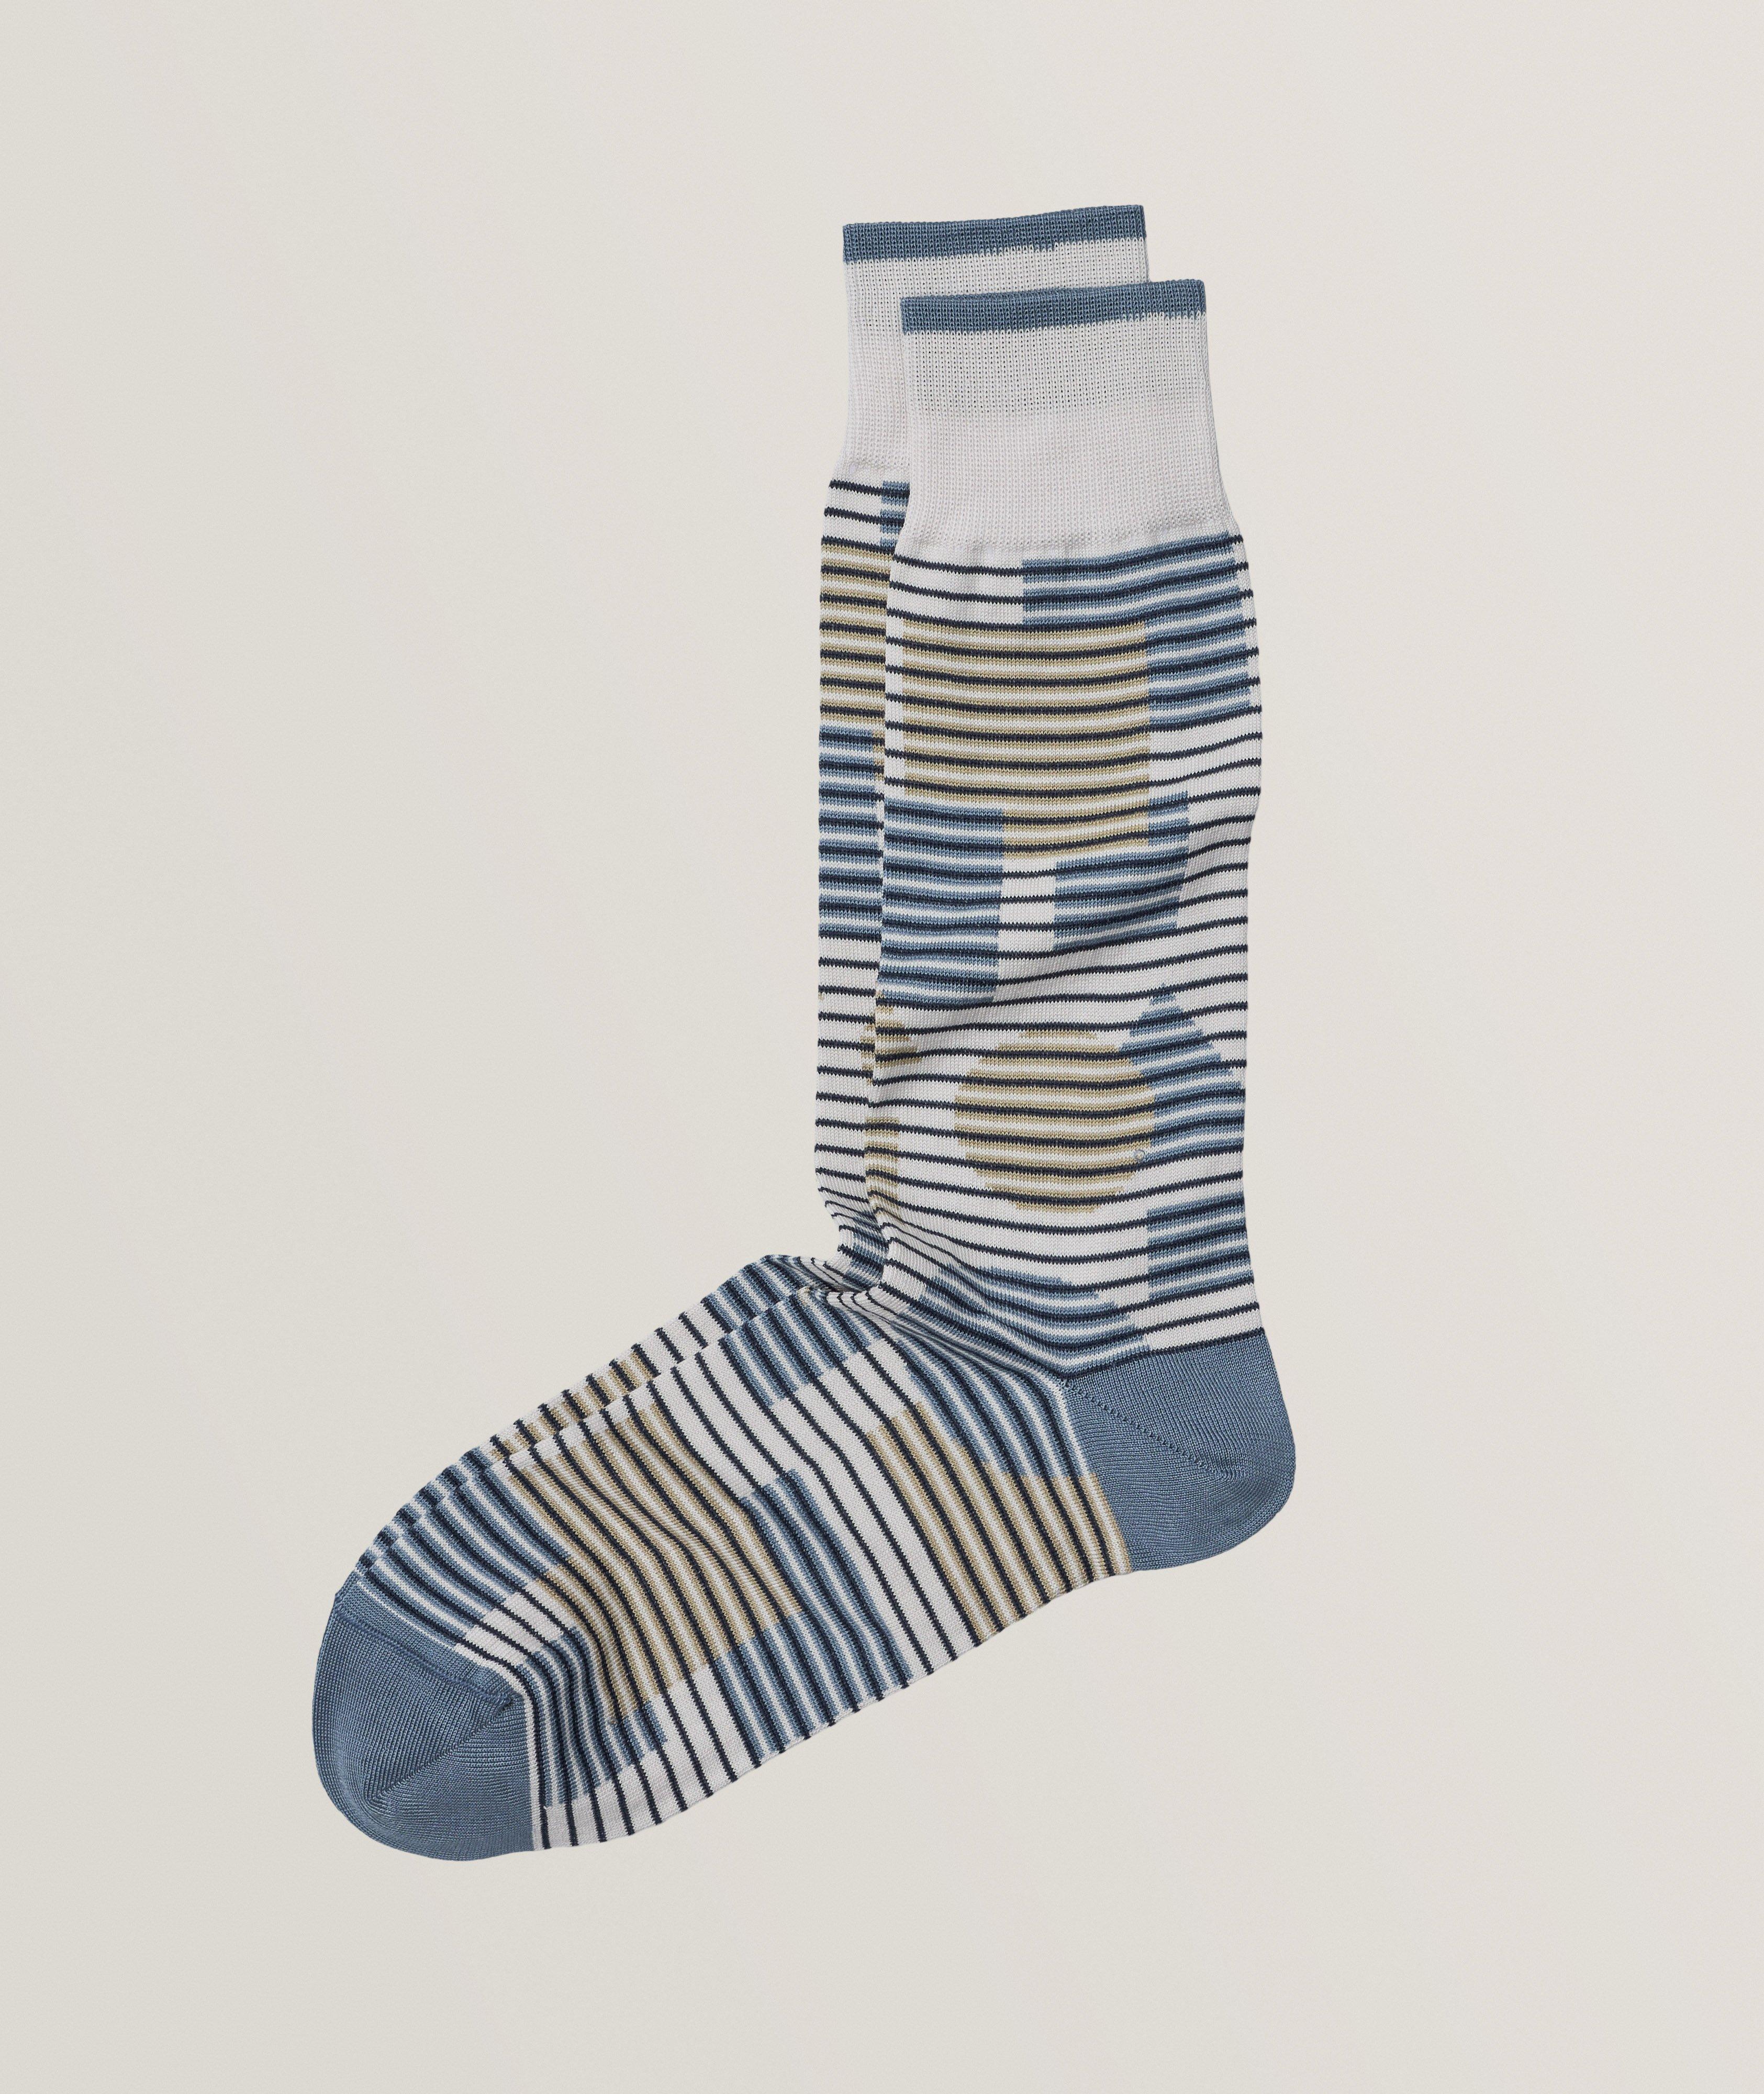 Geometric Striped Stretch-Mercerized Cotton Blend Socks image 0